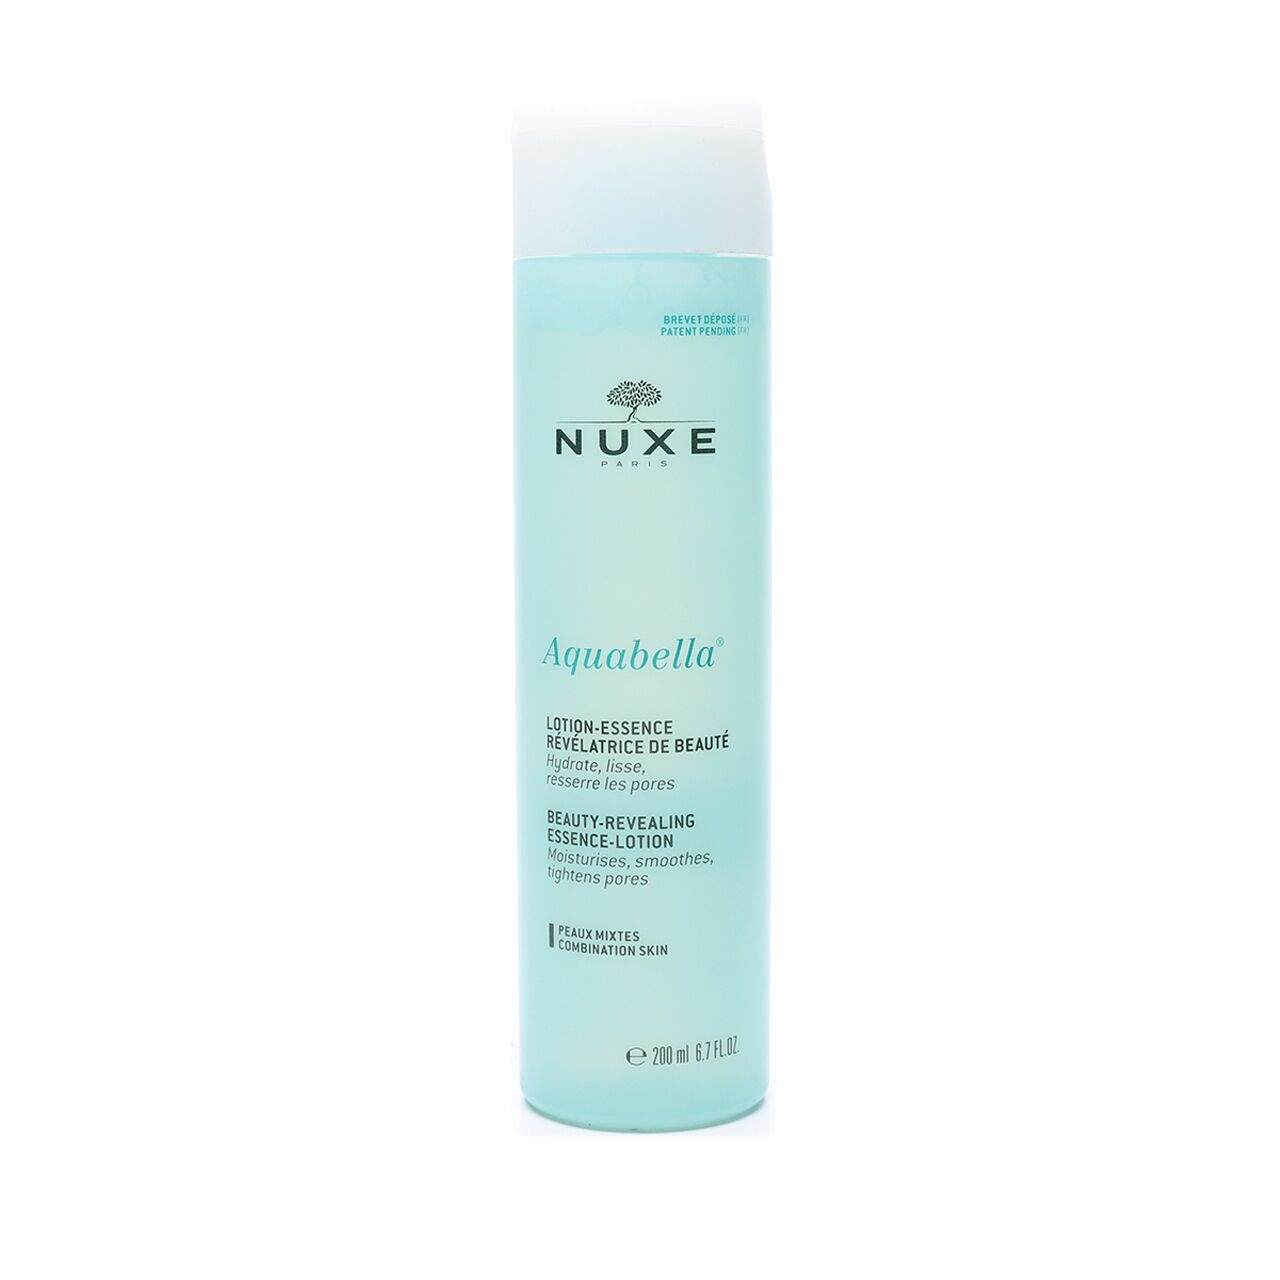 Nuxe Aquabella Beauty Revealing Essence Lotion Skin Care